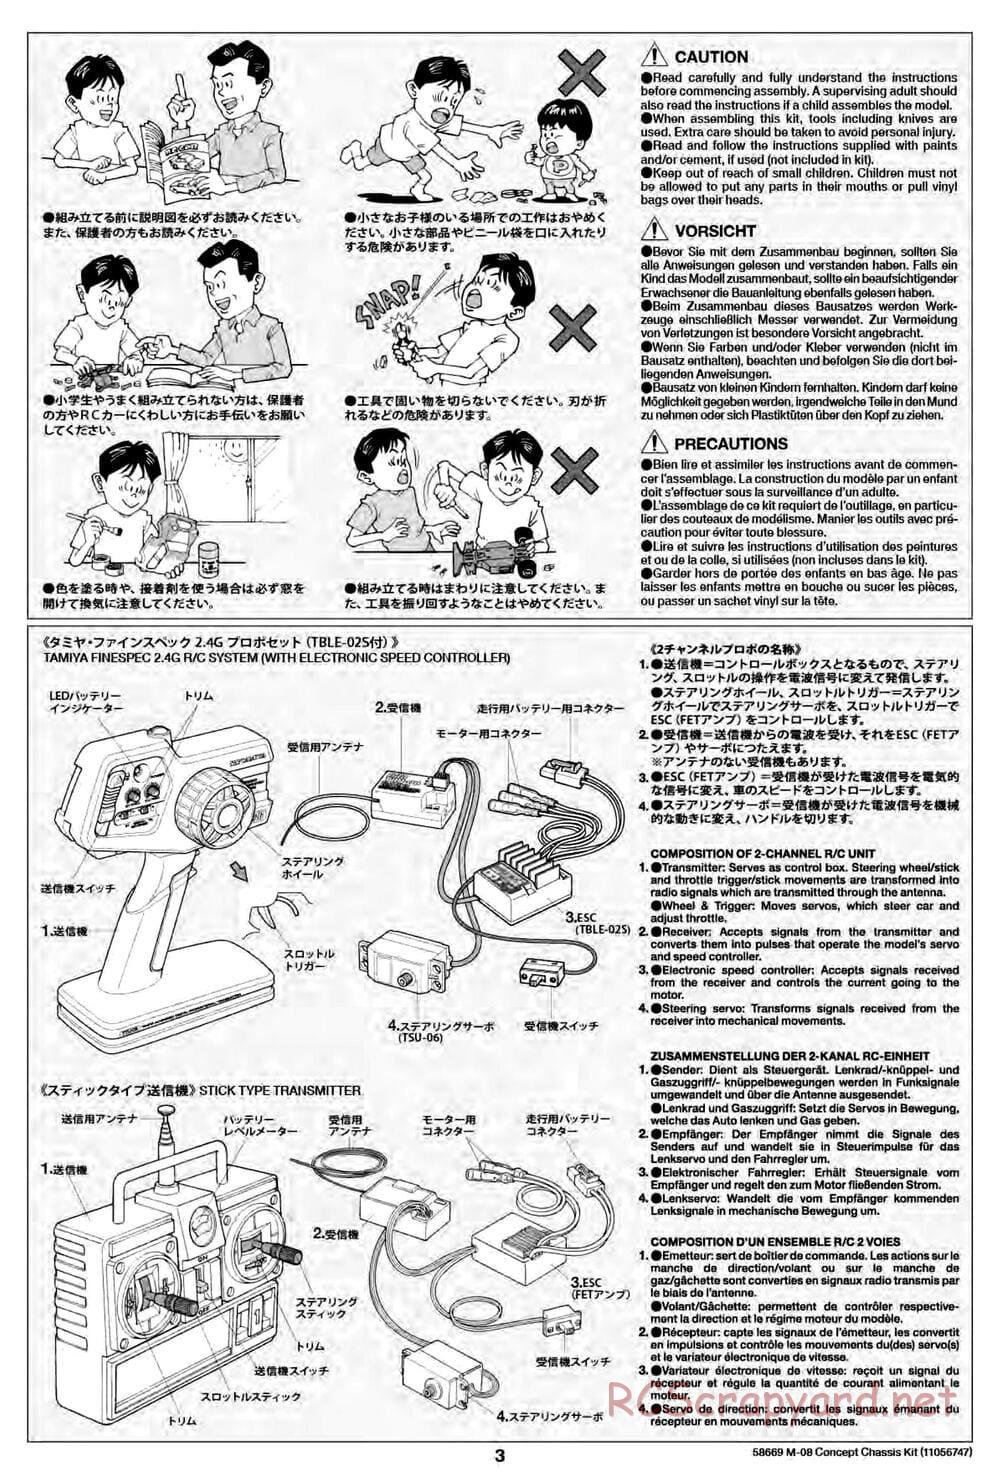 Tamiya - M-08 Concept Chassis - Manual - Page 3